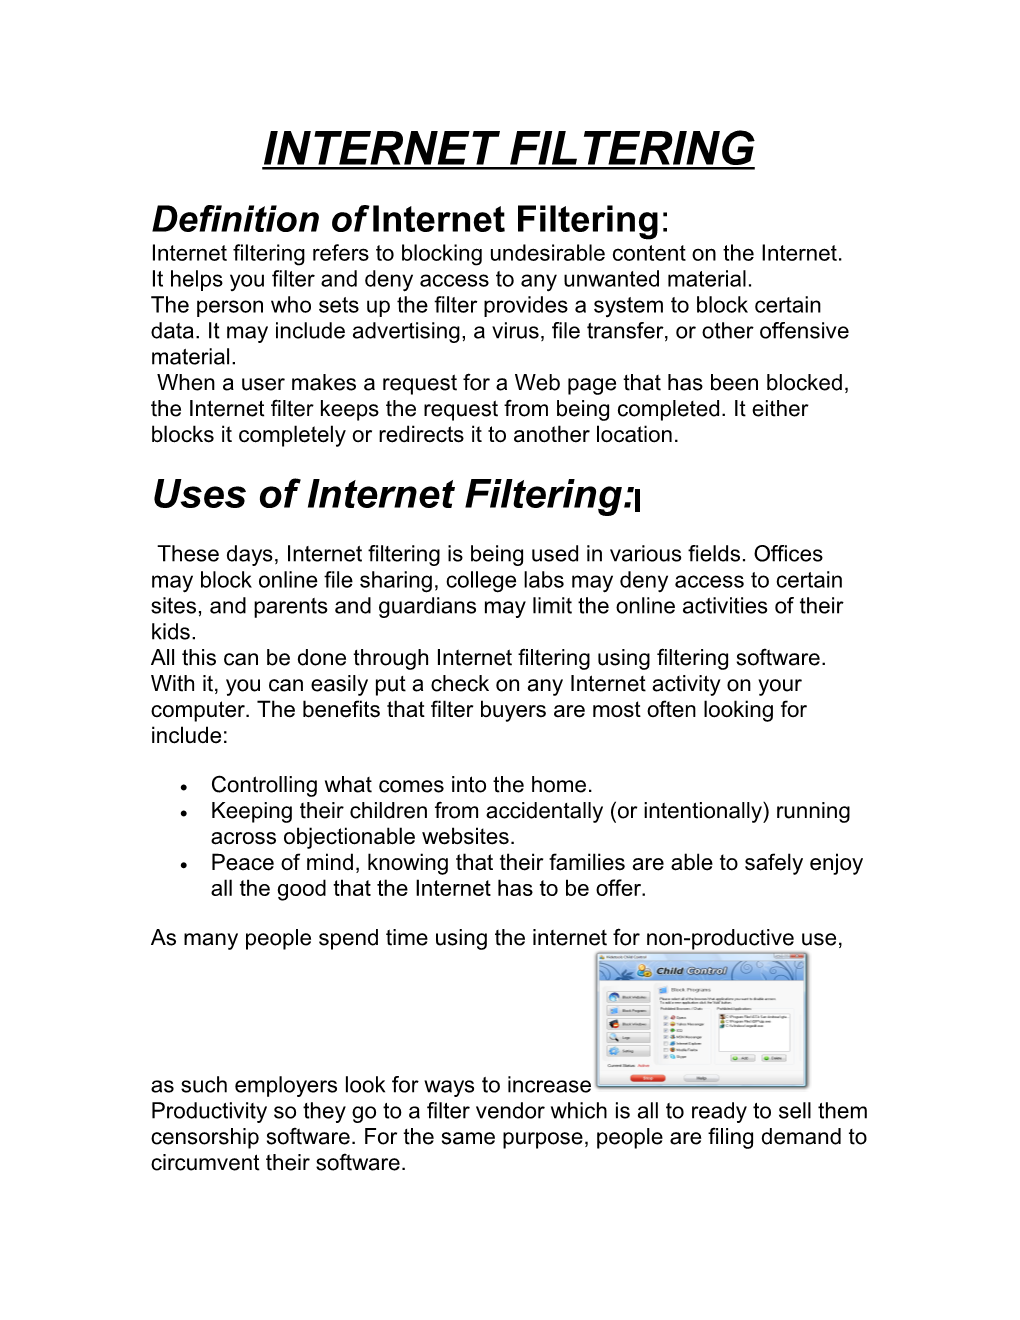 Definition of Internet Filtering